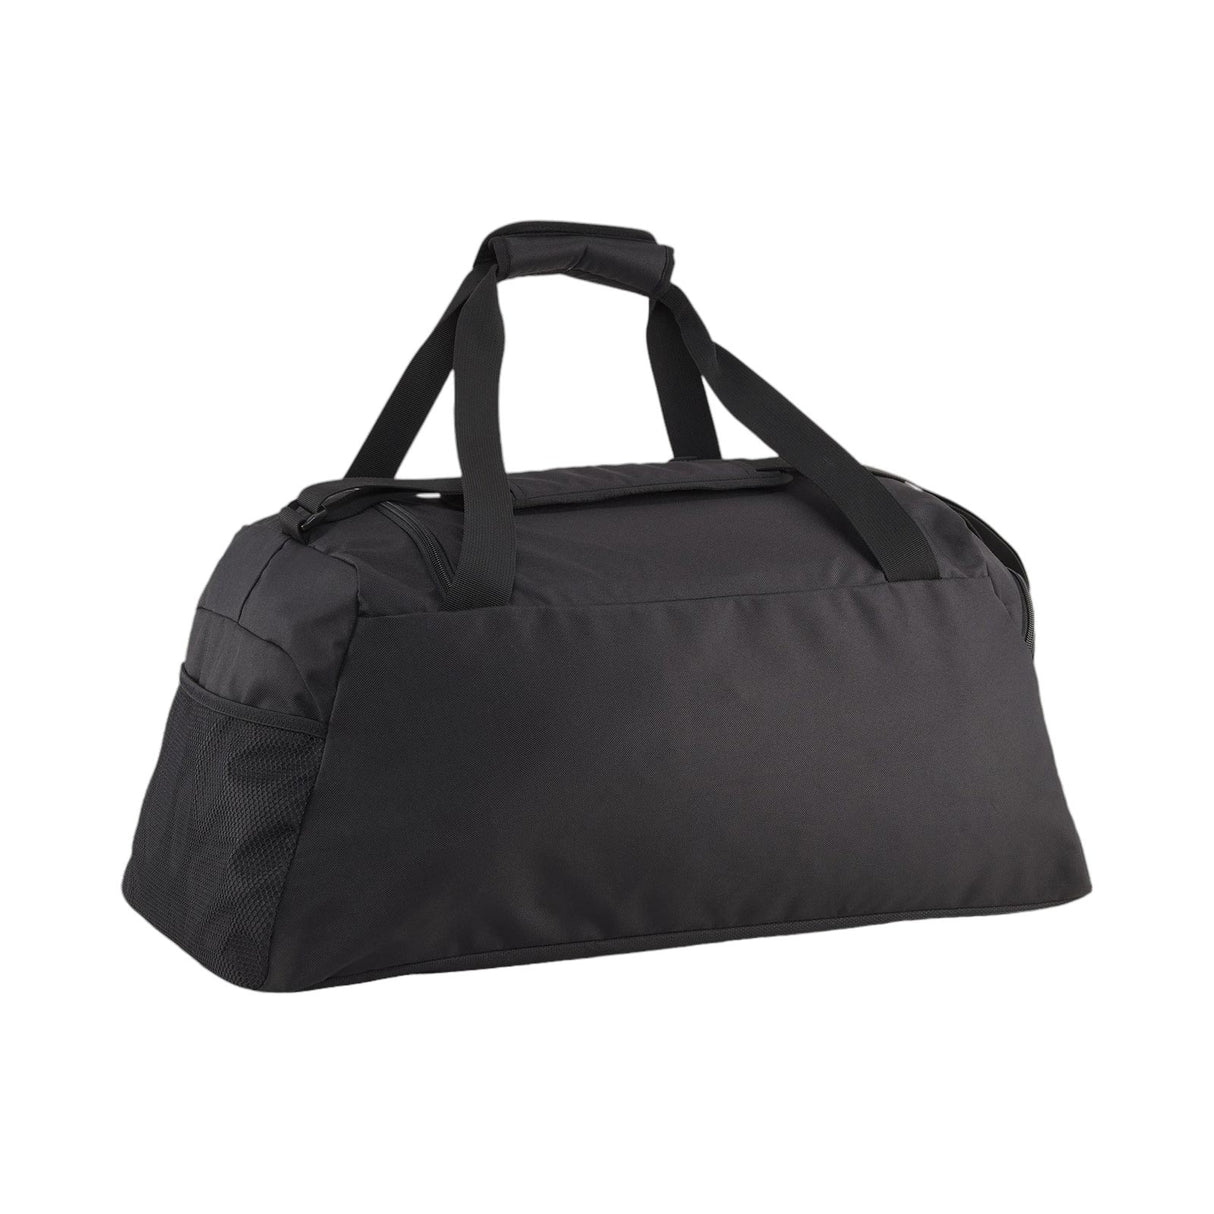 Puma Fundamentals Duffle Bag - Medium